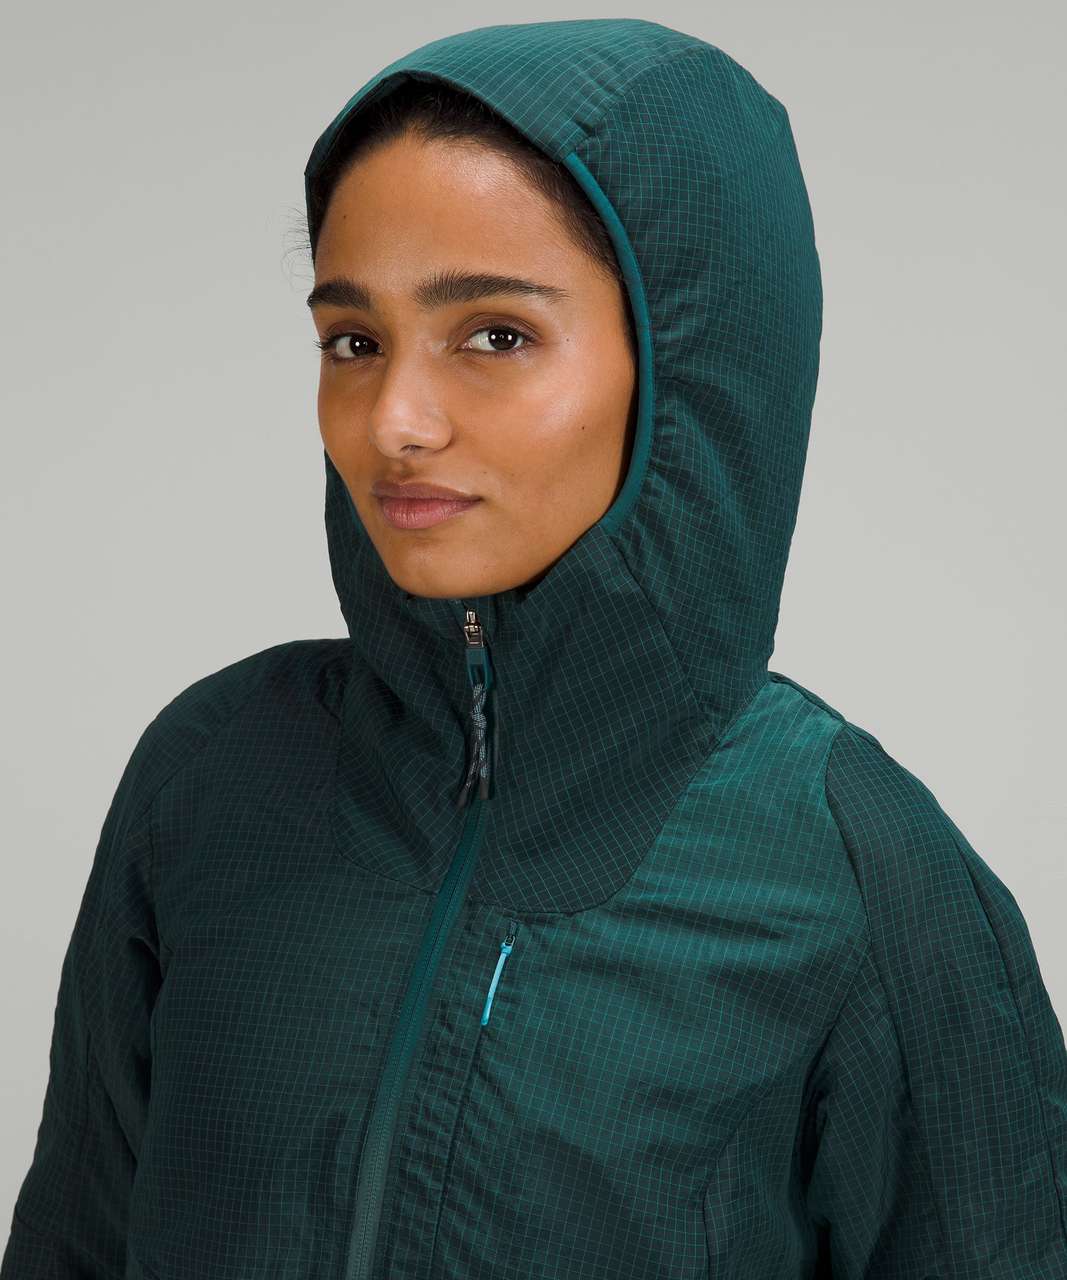 Lululemon Lightweight Insulated Hiking Jacket - Green Jasper